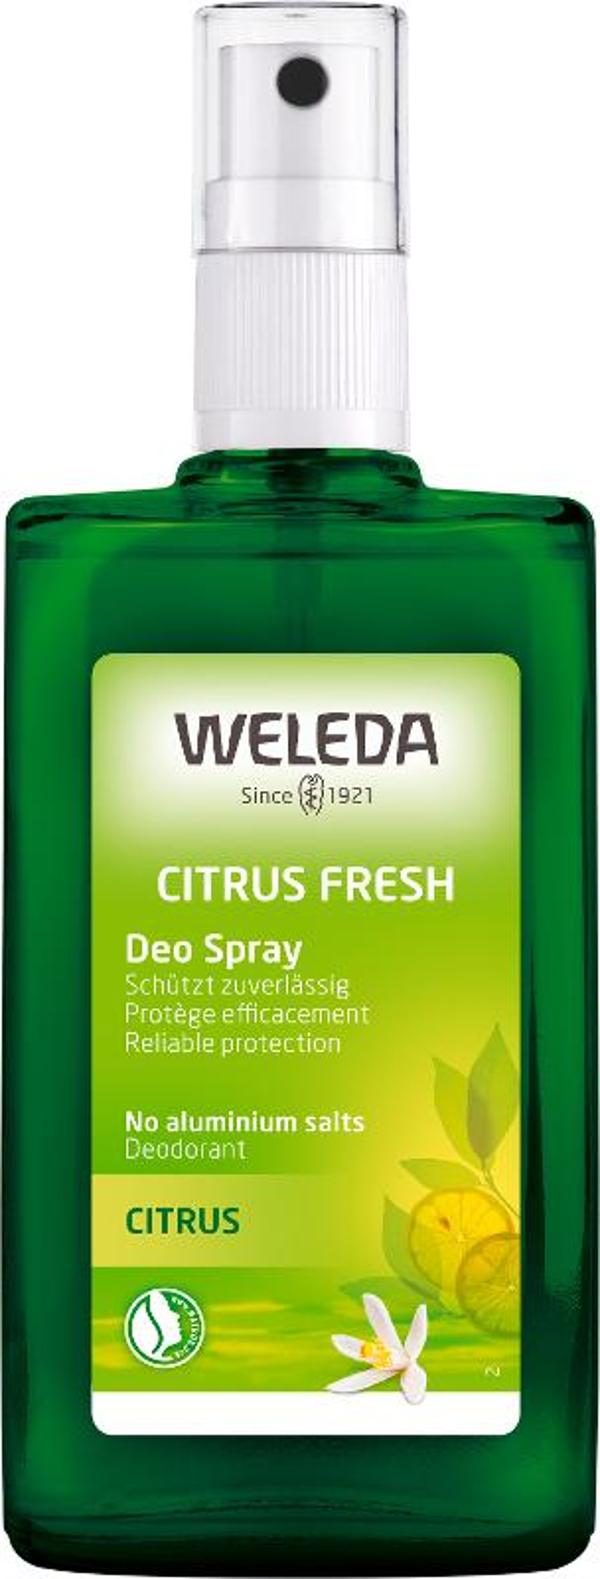 Produktfoto zu Citrus Deodorant 100 ml Weleda